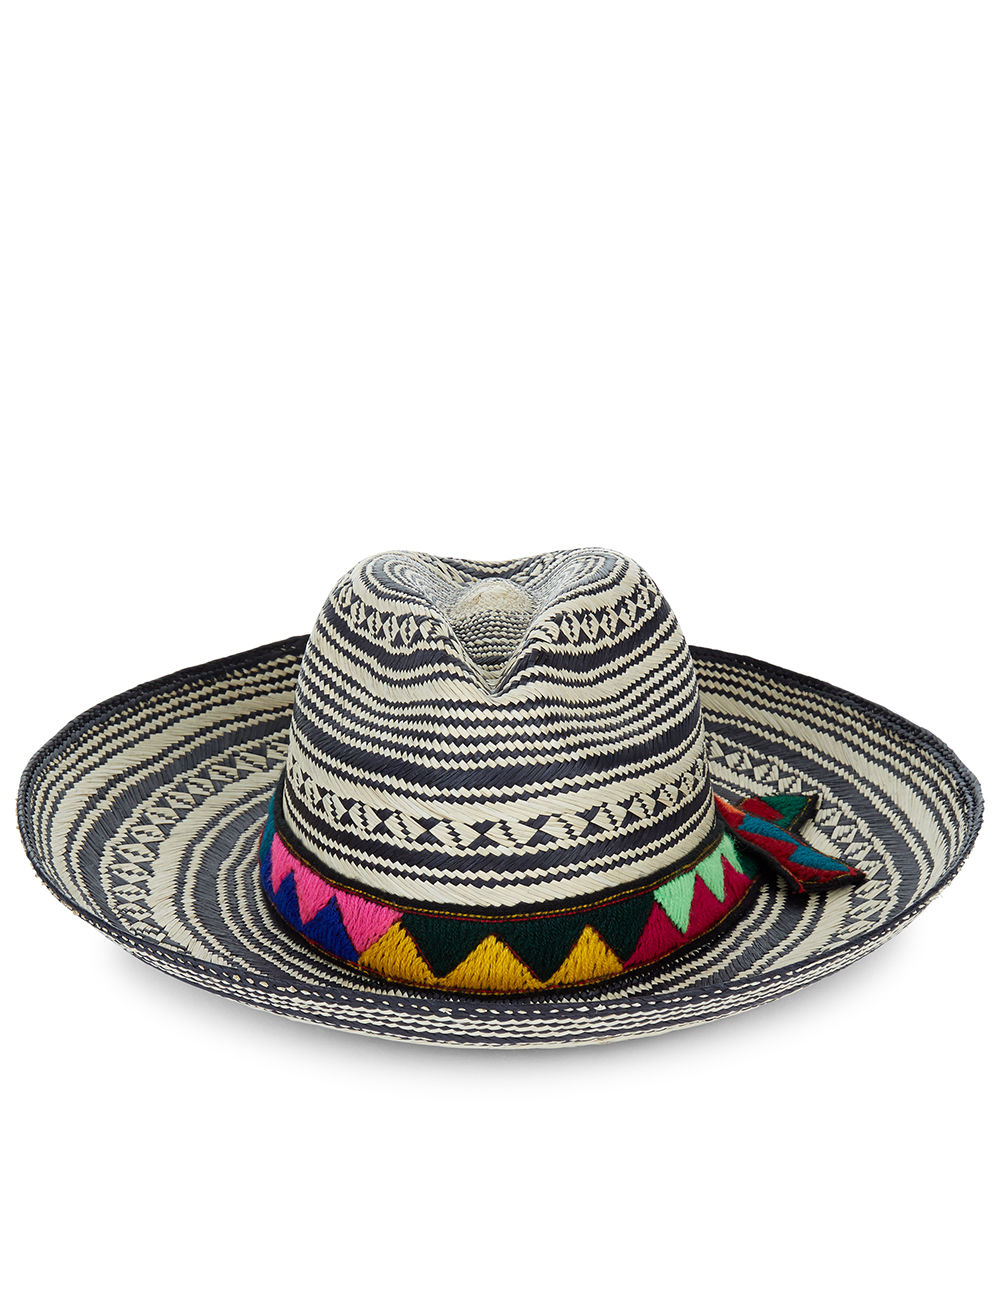 Sensi Studio Black & Beige Colombia Panama Straw Hat | ModeSens